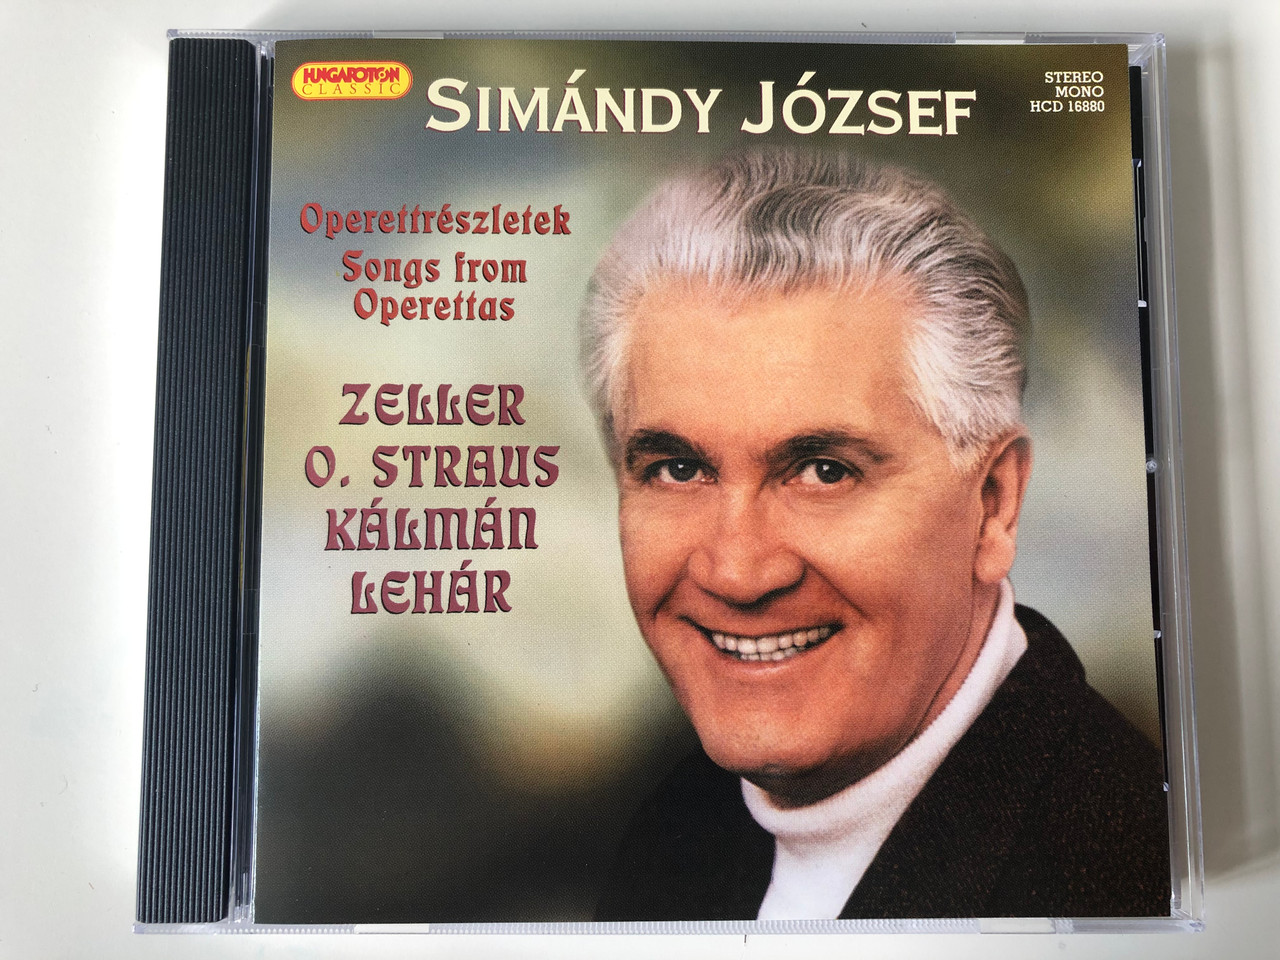 Simándy József ‎– Operettrészletek, Songs From Operettas / Zeller - O.  Straus, Kálmán, Lehár / Hungaroton Classic ‎Audio CD 2005 Stereo, Mono /  HCD 16880 - Bible in My Language